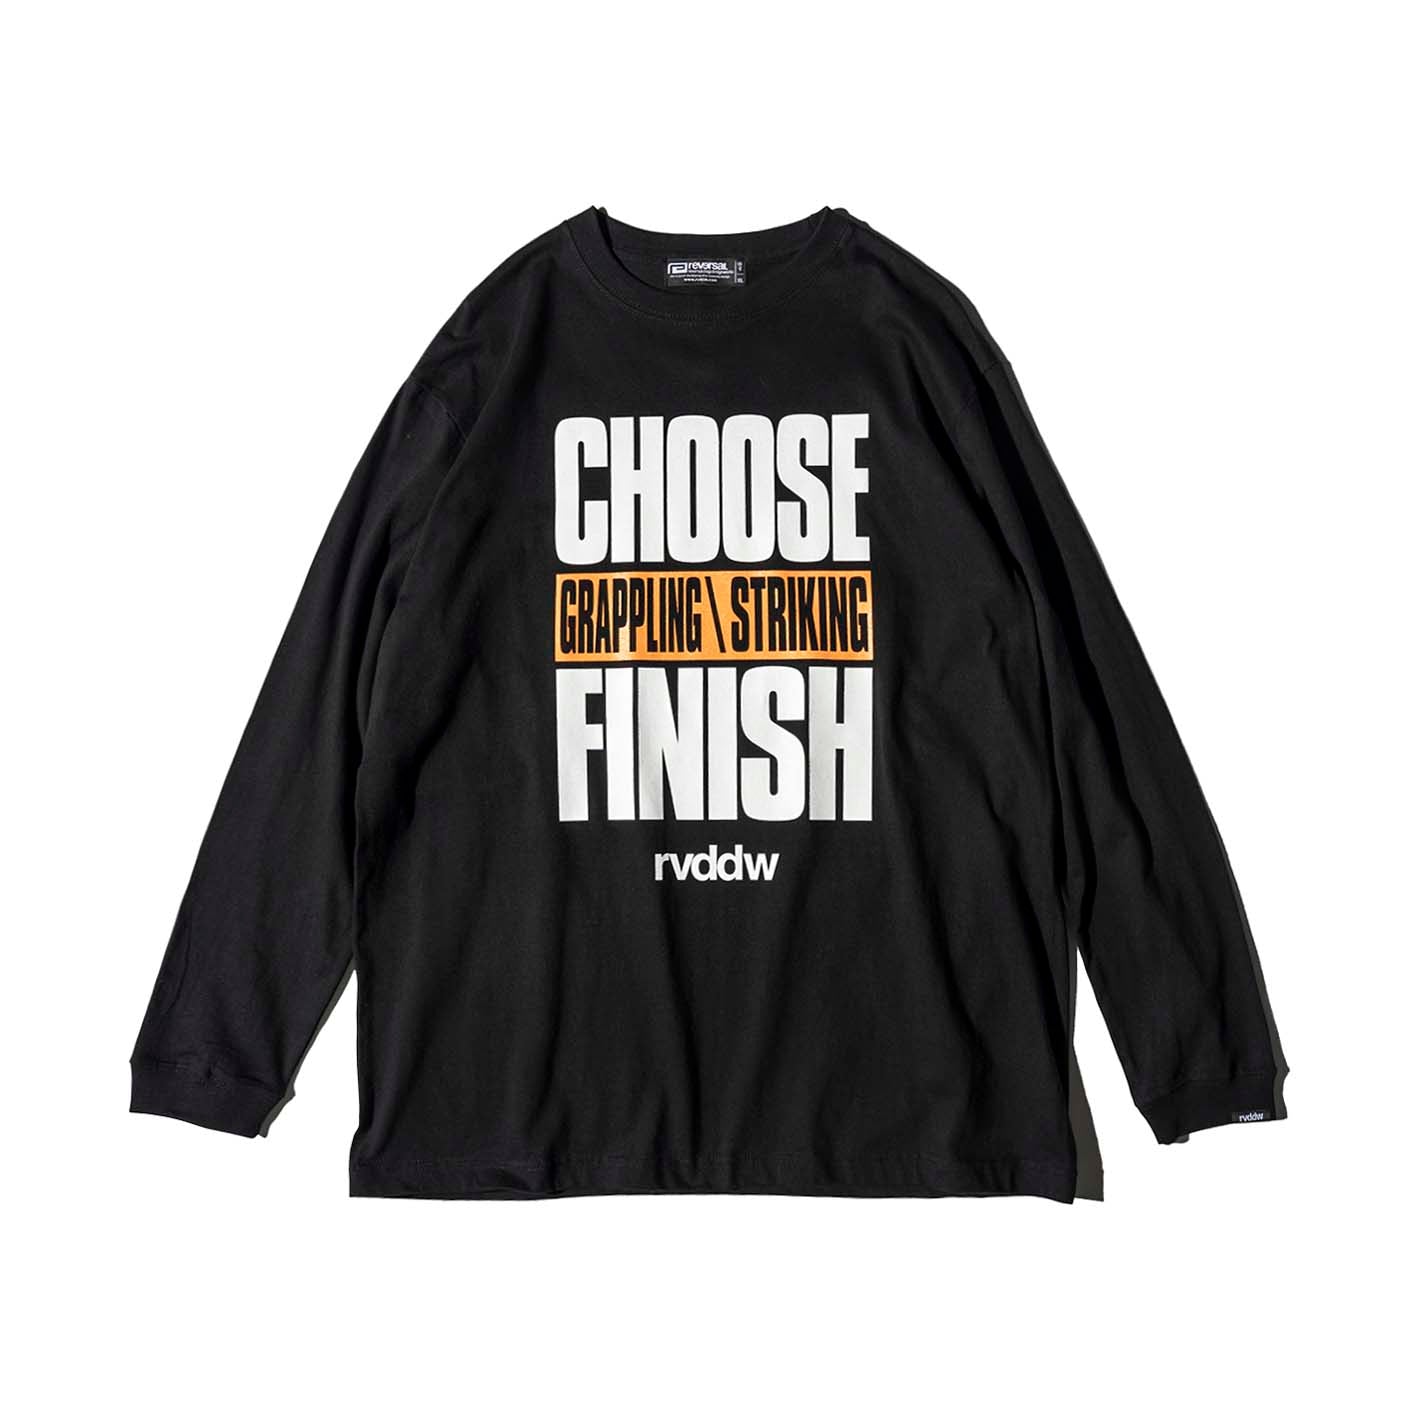 Choose The Finish T-Shirt-Reversal RVDDW-ChokeSports